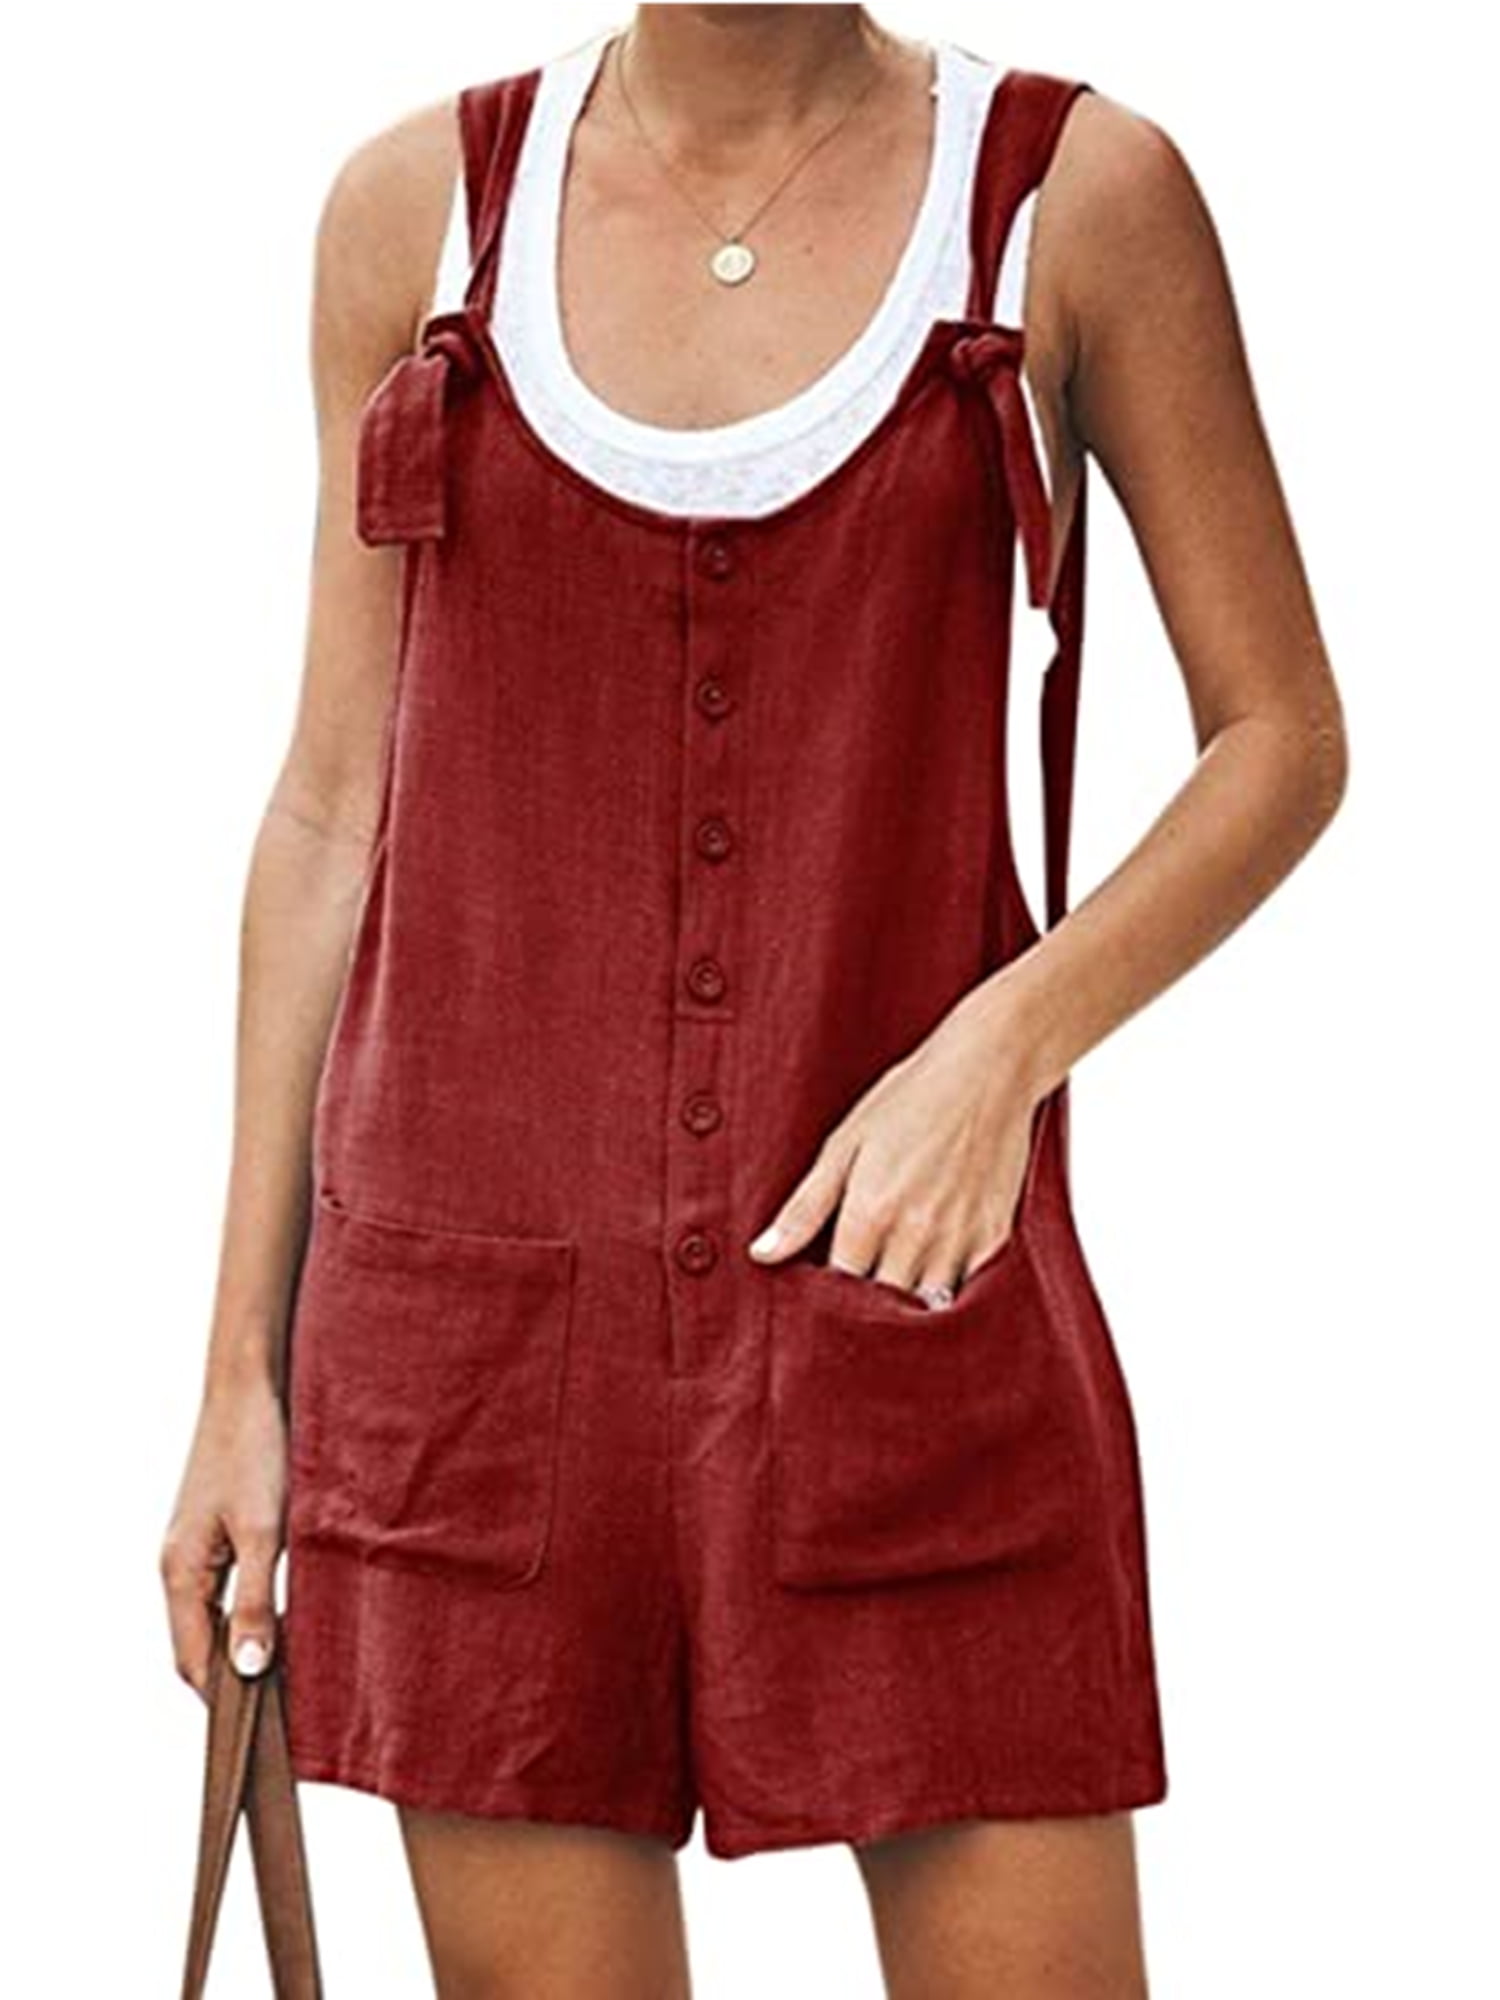 Women Overalls Pocket Romper Long Playsuit Button Jumpsuit One-Piece Suspenders 